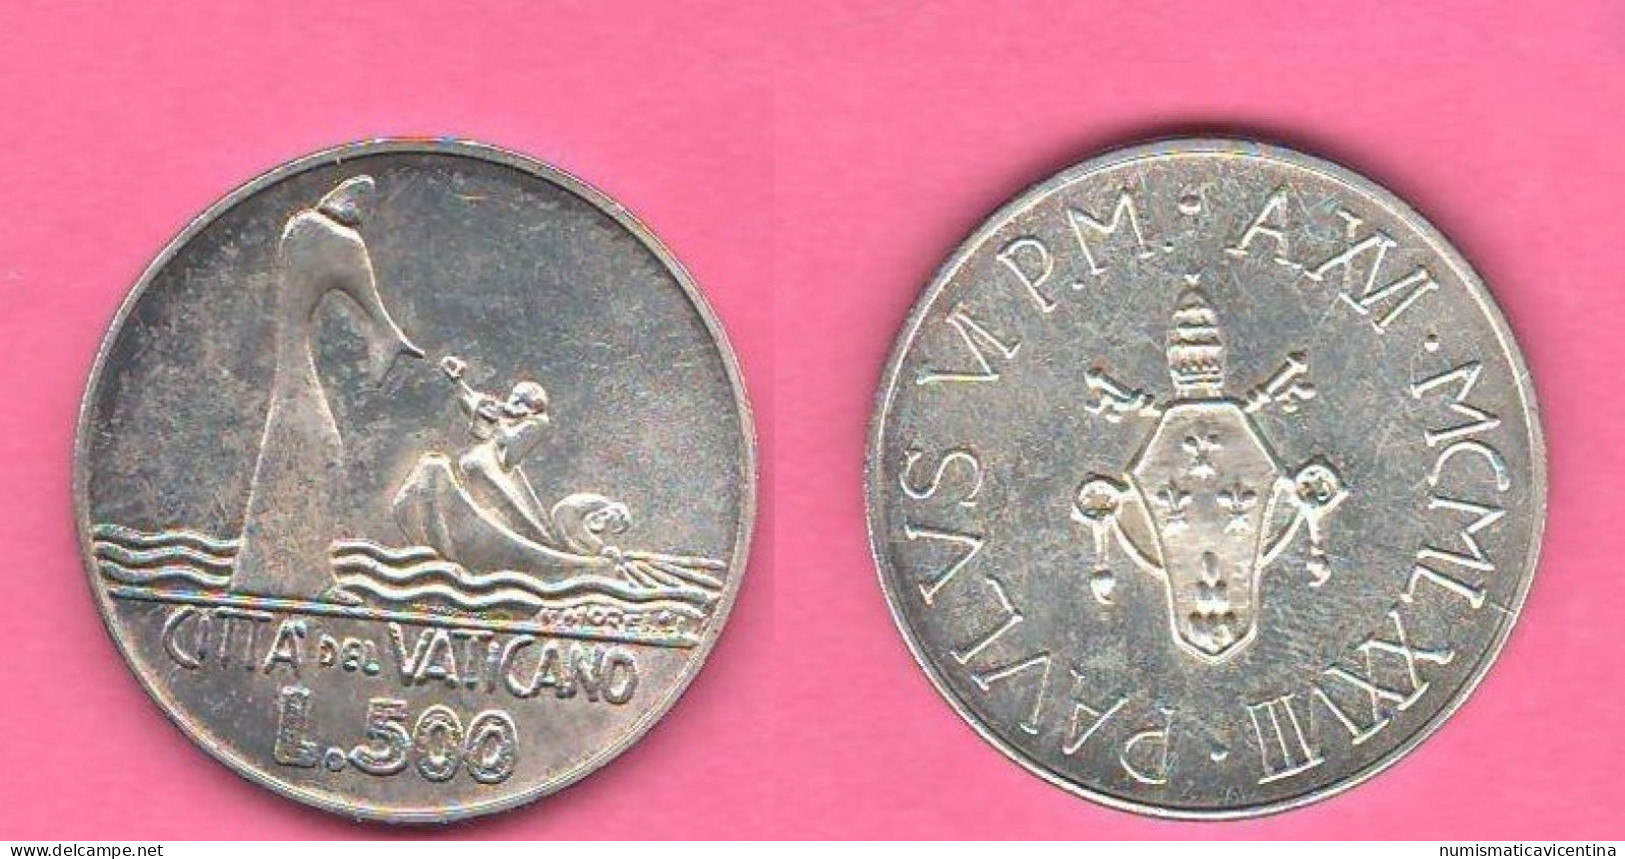 Vaticano 500 Lire 1978 Paolo VI° Anno XVI° Vatican City Silver Coin - Vaticano (Ciudad Del)